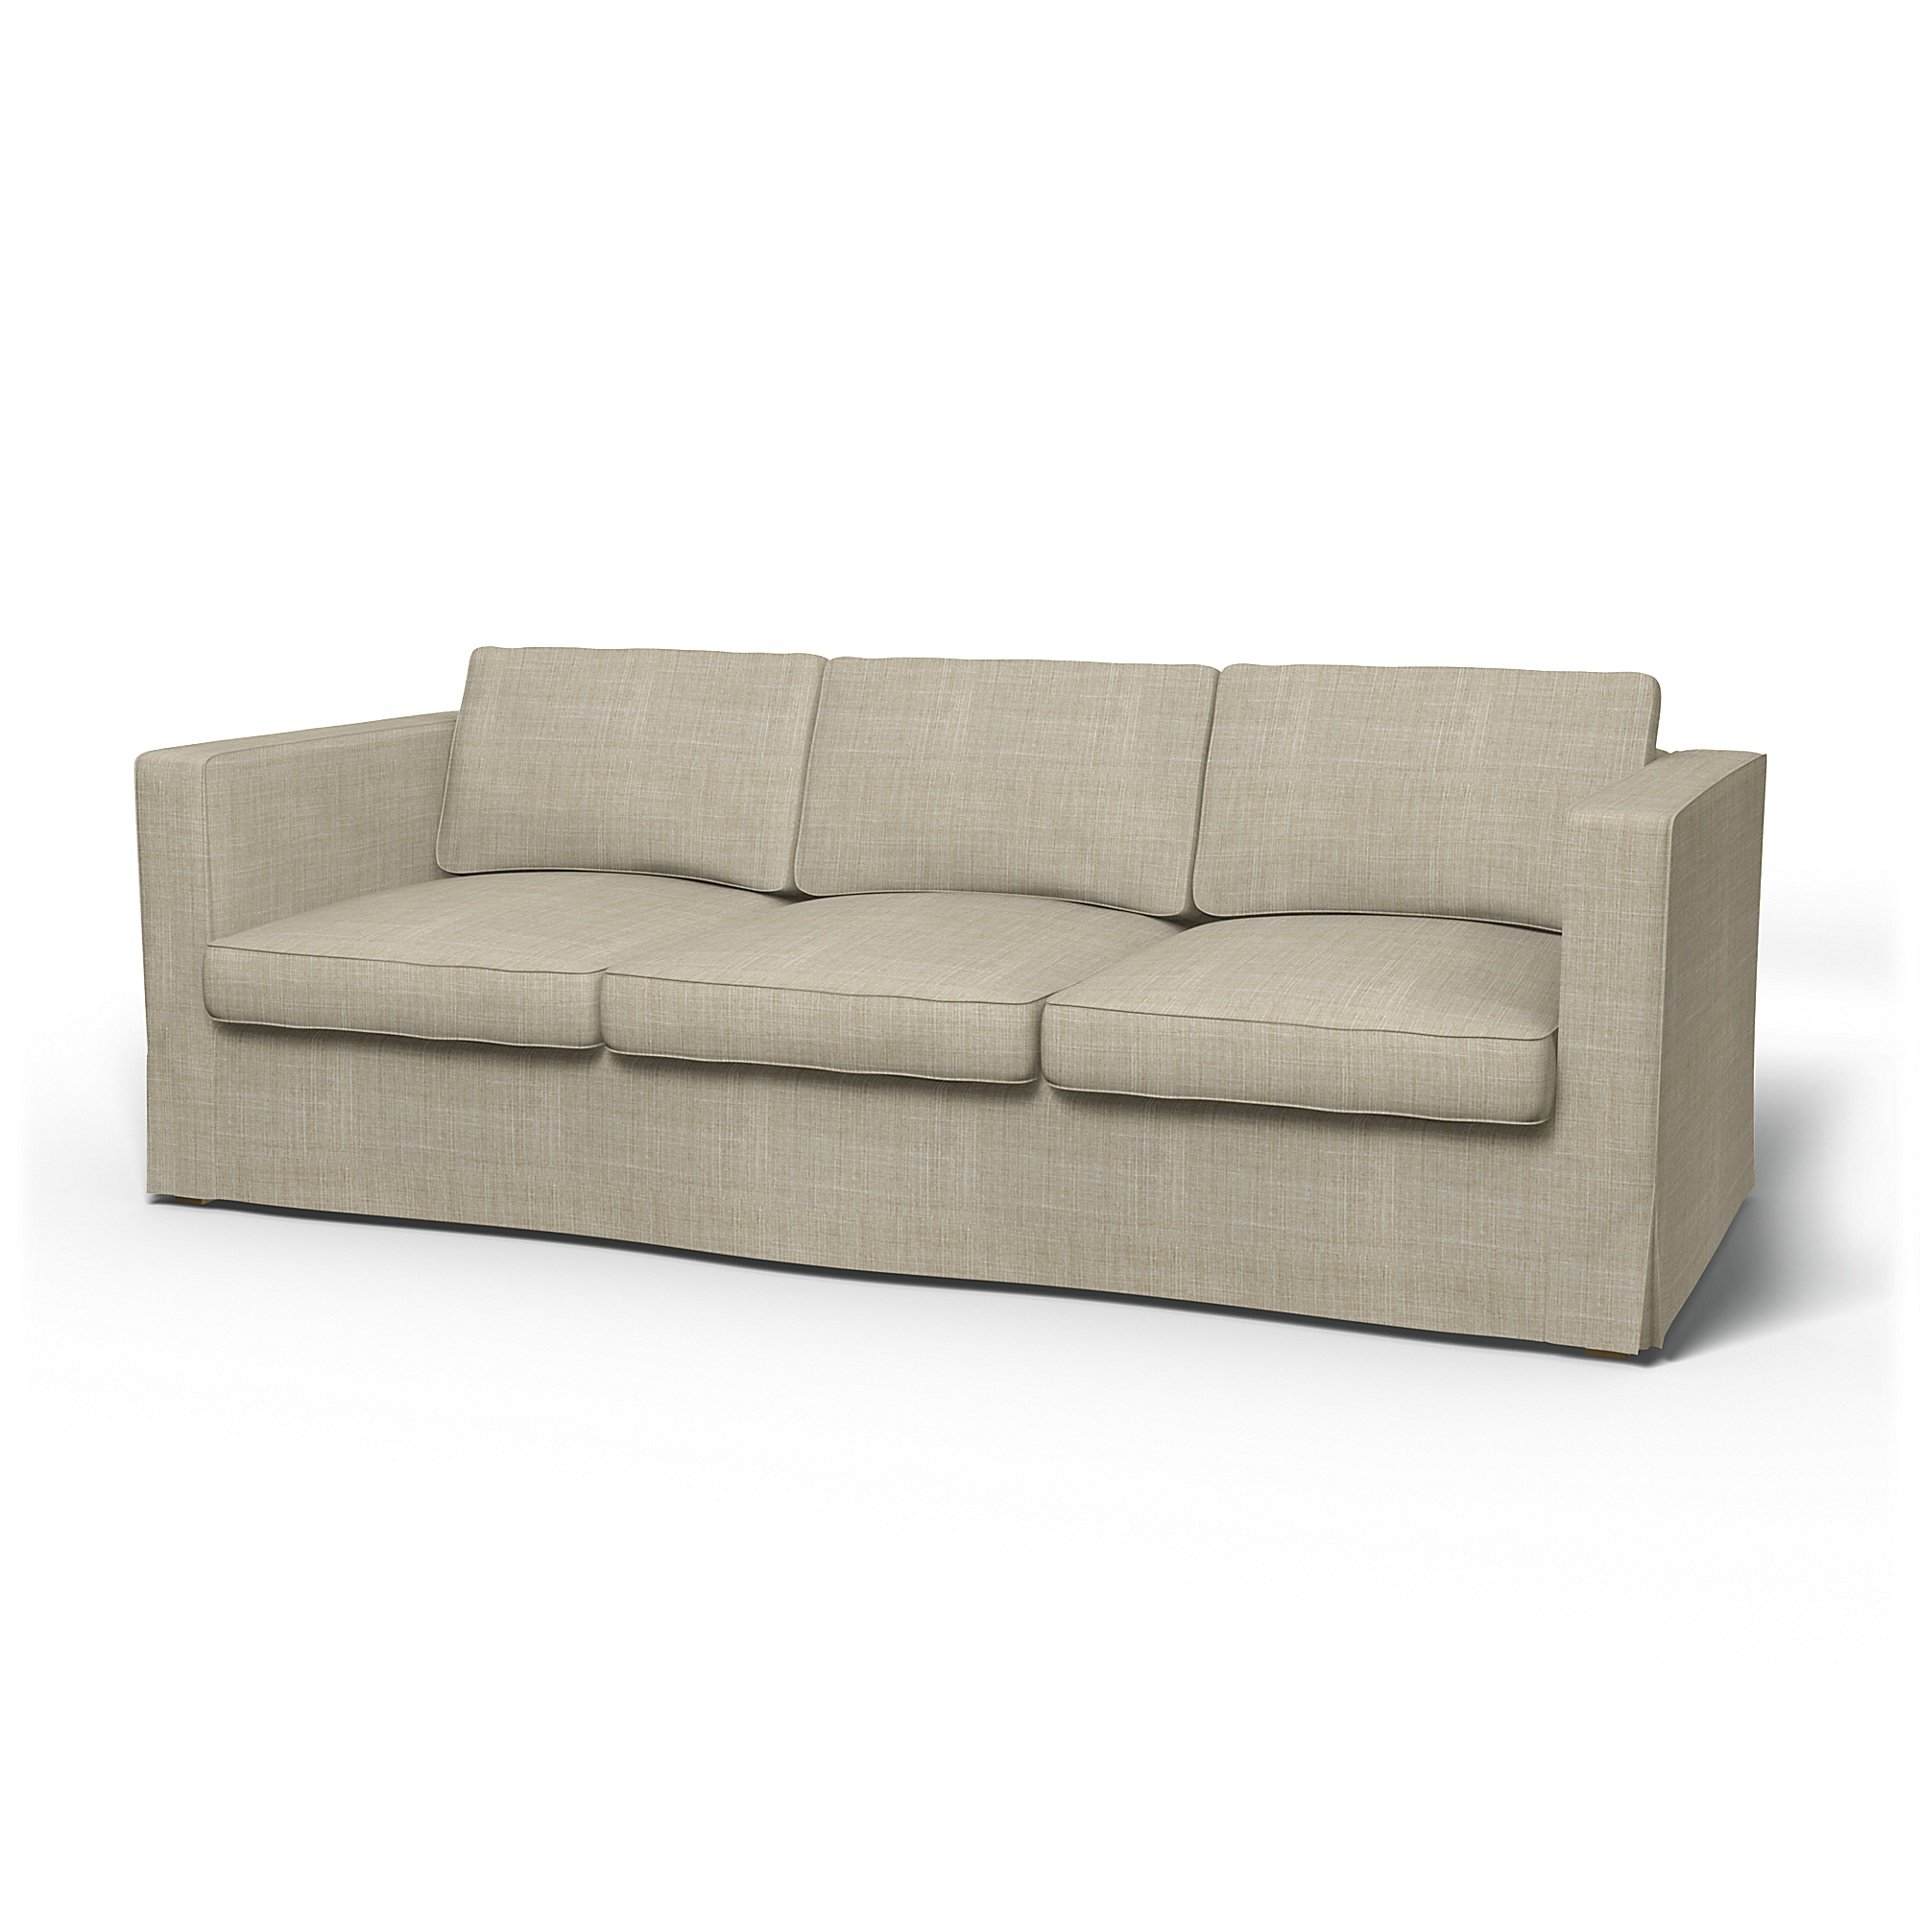 IKEA - Karlanda 3 Seater Sofa Cover, Sand Beige, Boucle & Texture - Bemz